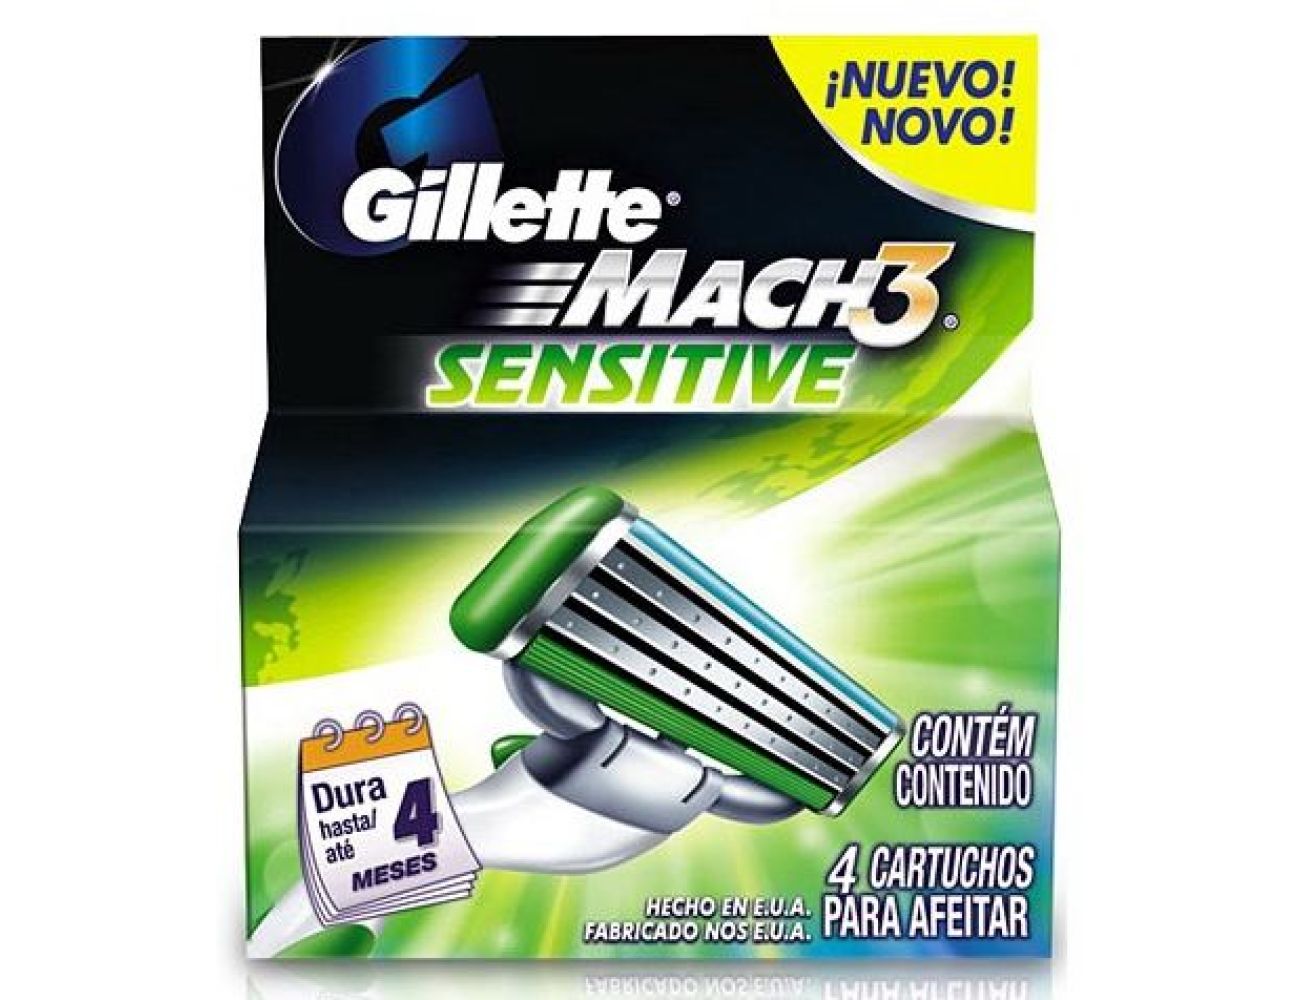 Gillette Mach3 Sensitive лезвия для станка 4 шт. 7702018037896